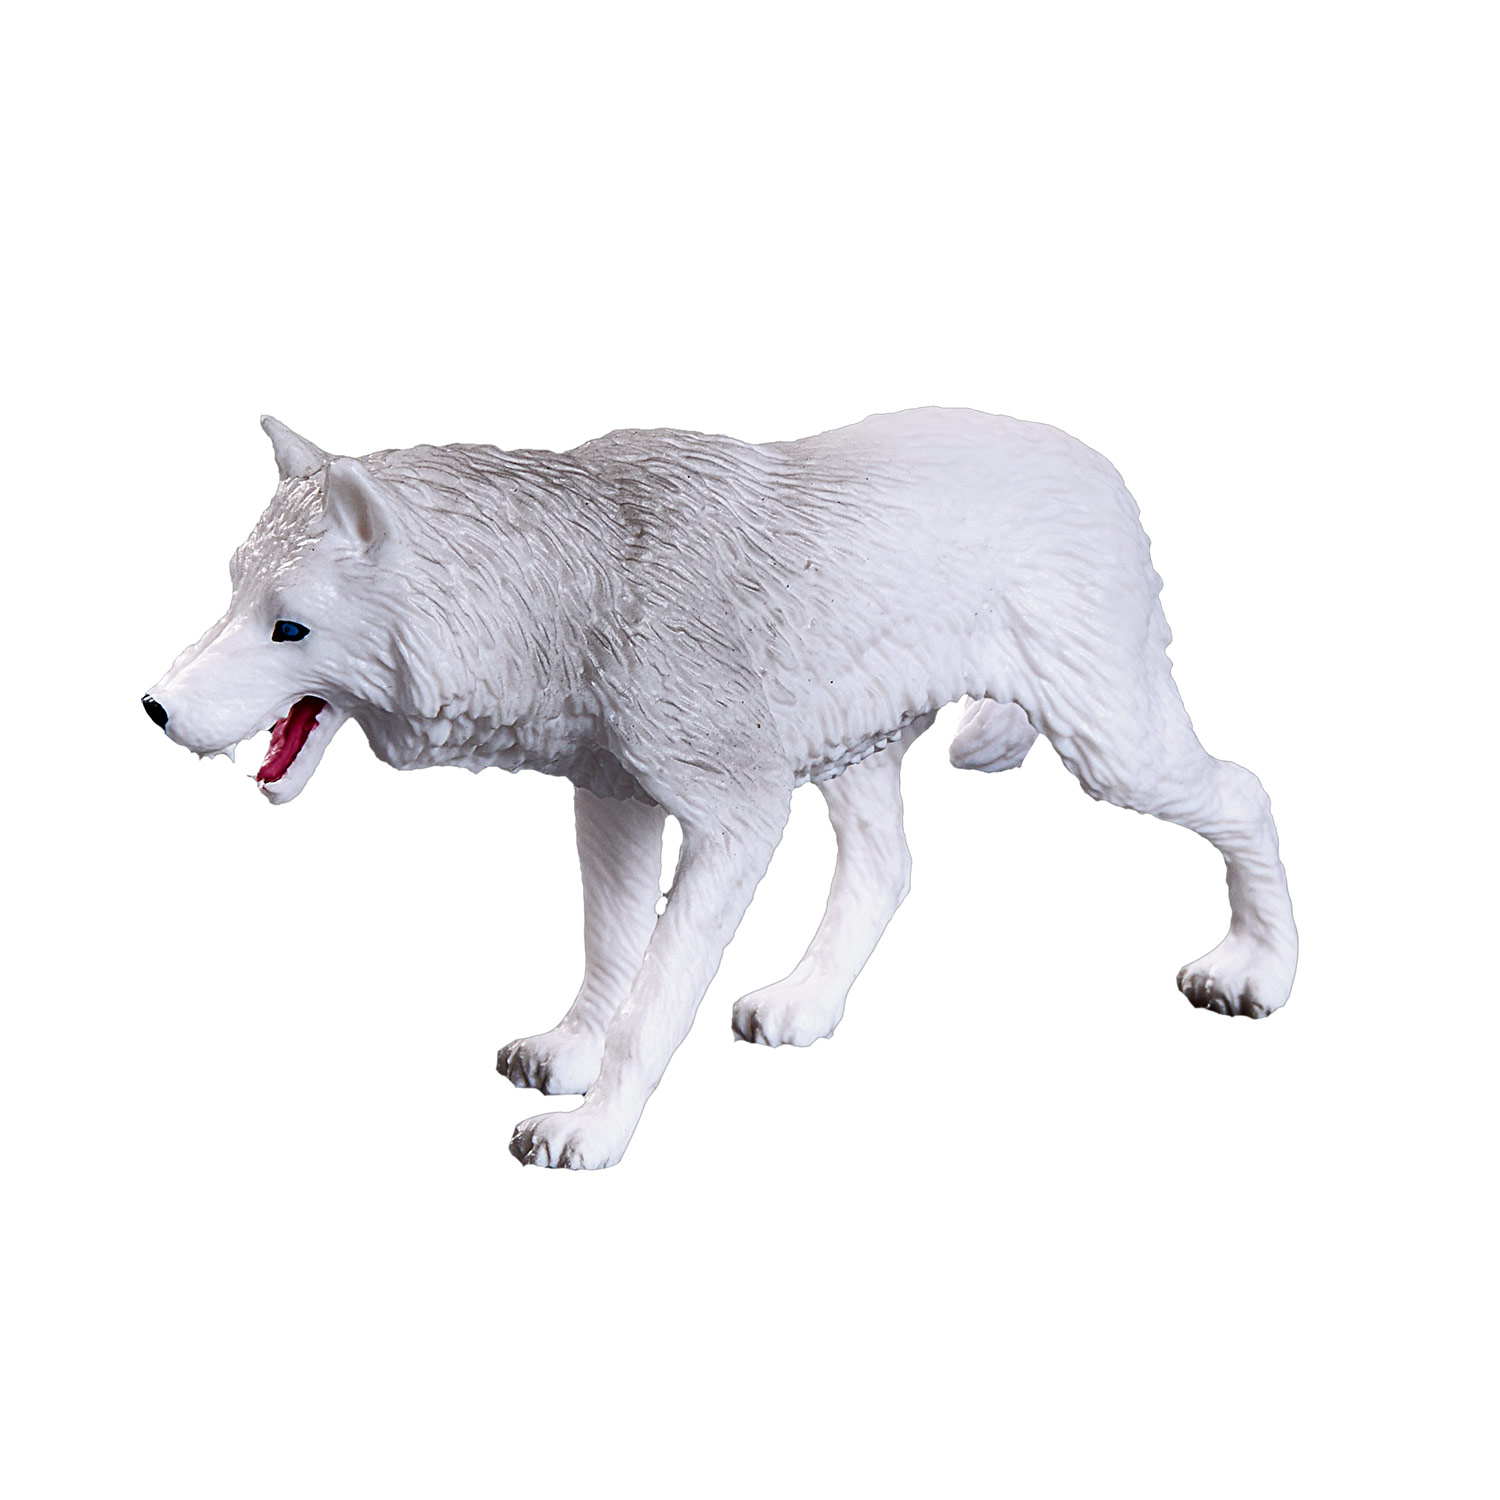 Loup arctique Mojo Wildlife - 381052